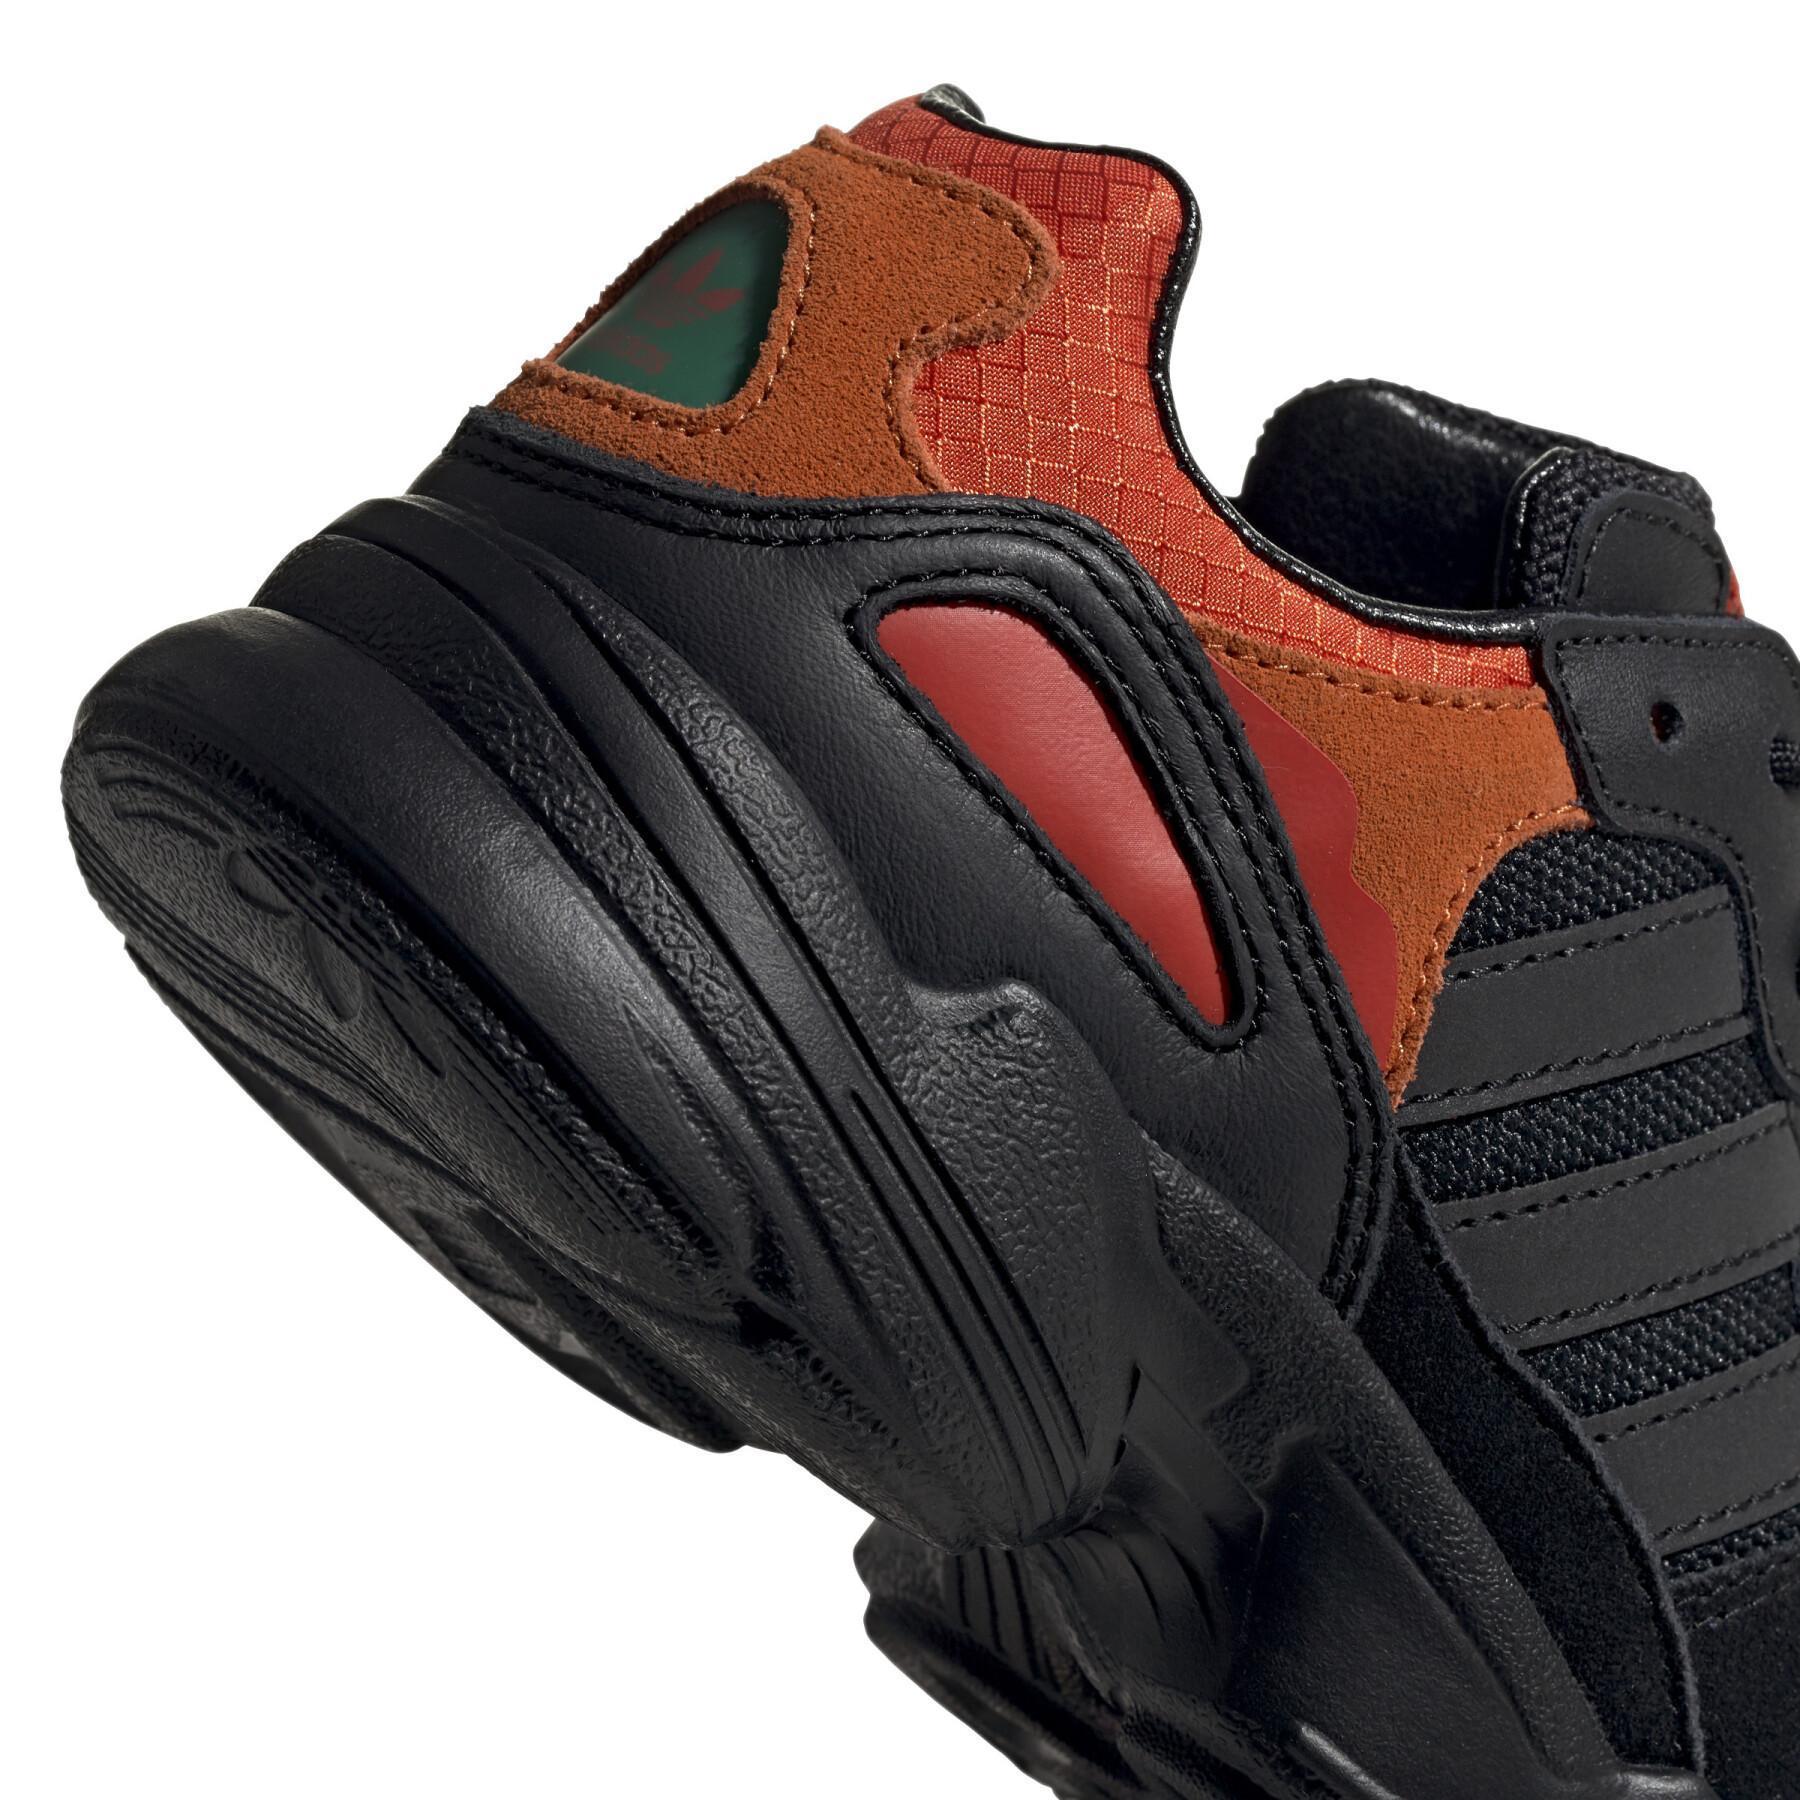 adidas Yung-96 kid sneakers